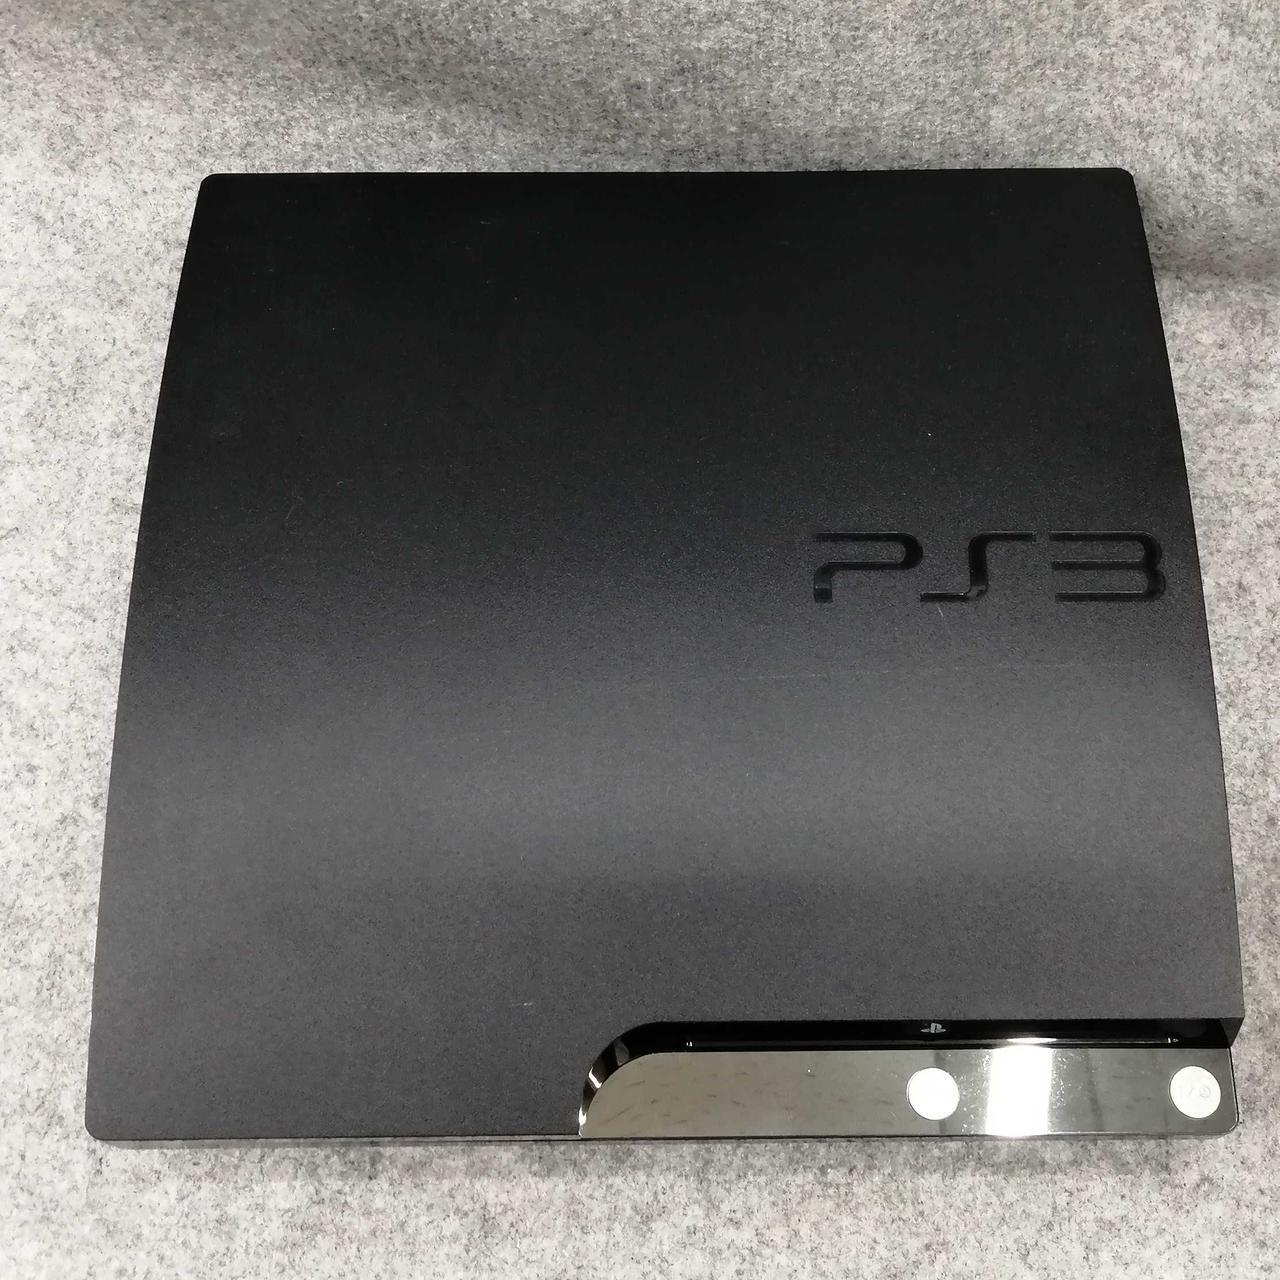 Sony Cech-2000A Playstation 3 Main Unit 0628-13